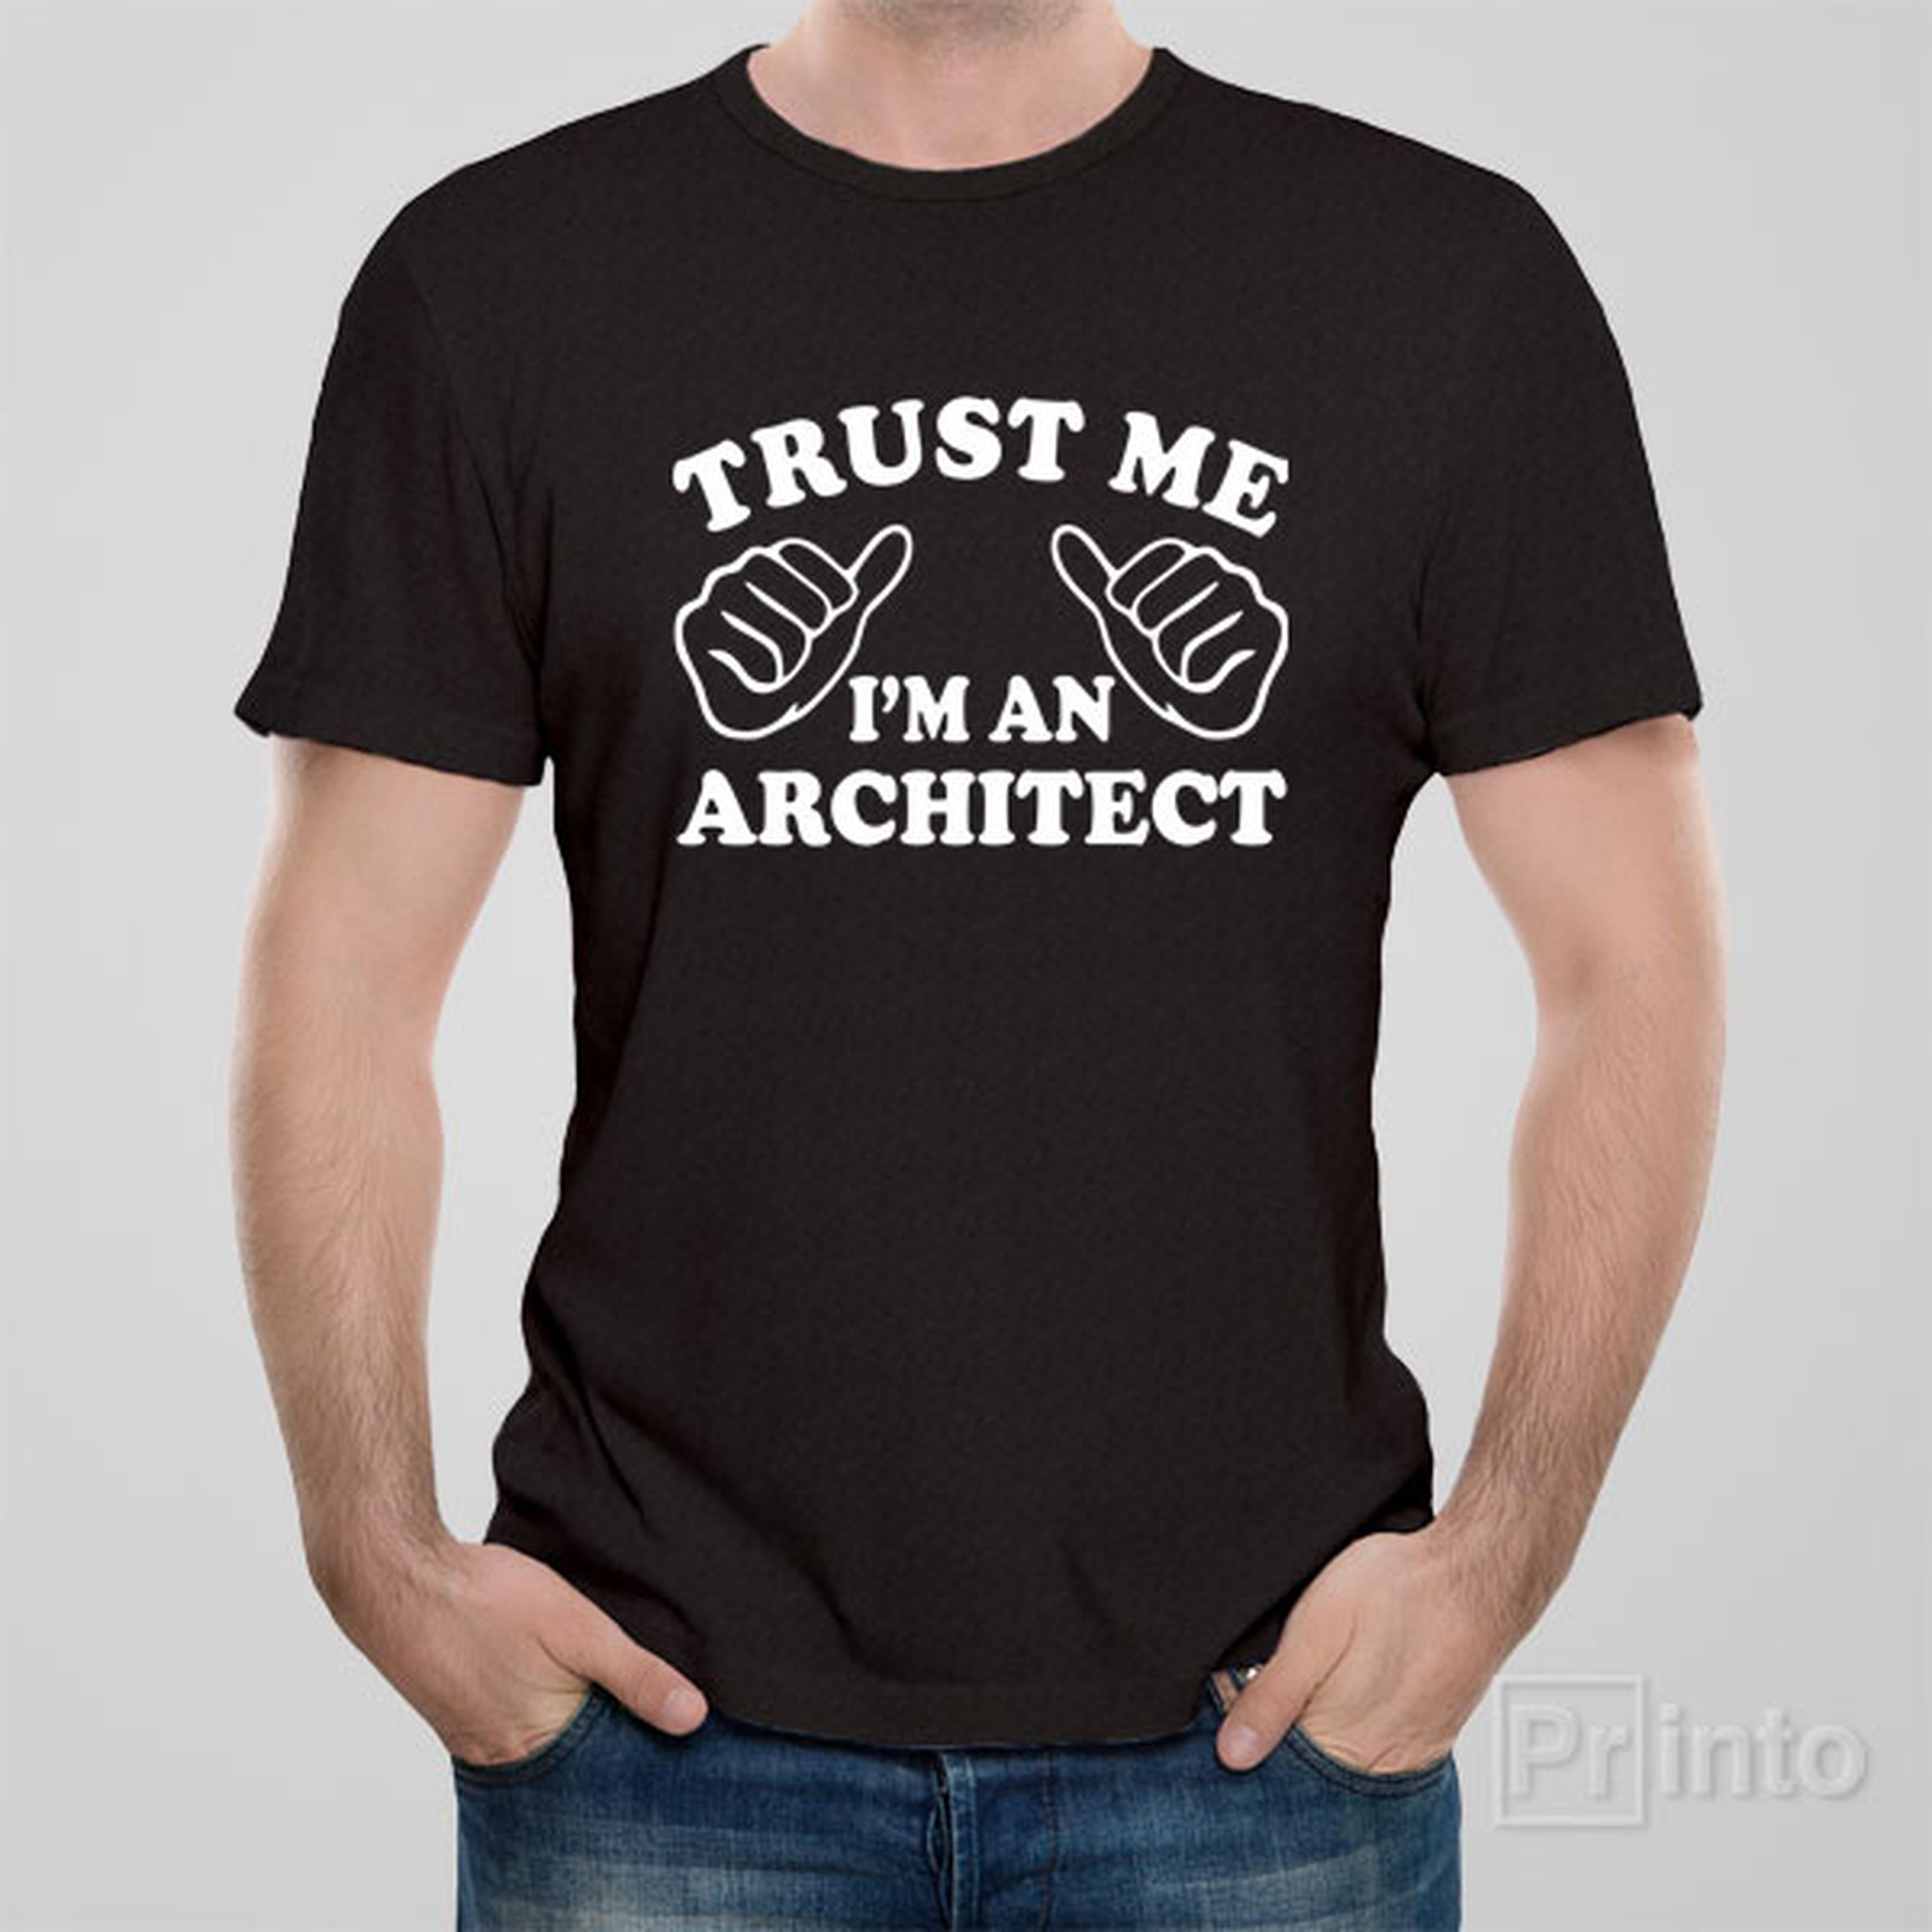 trust-me-i-am-an-architect-t-shirt